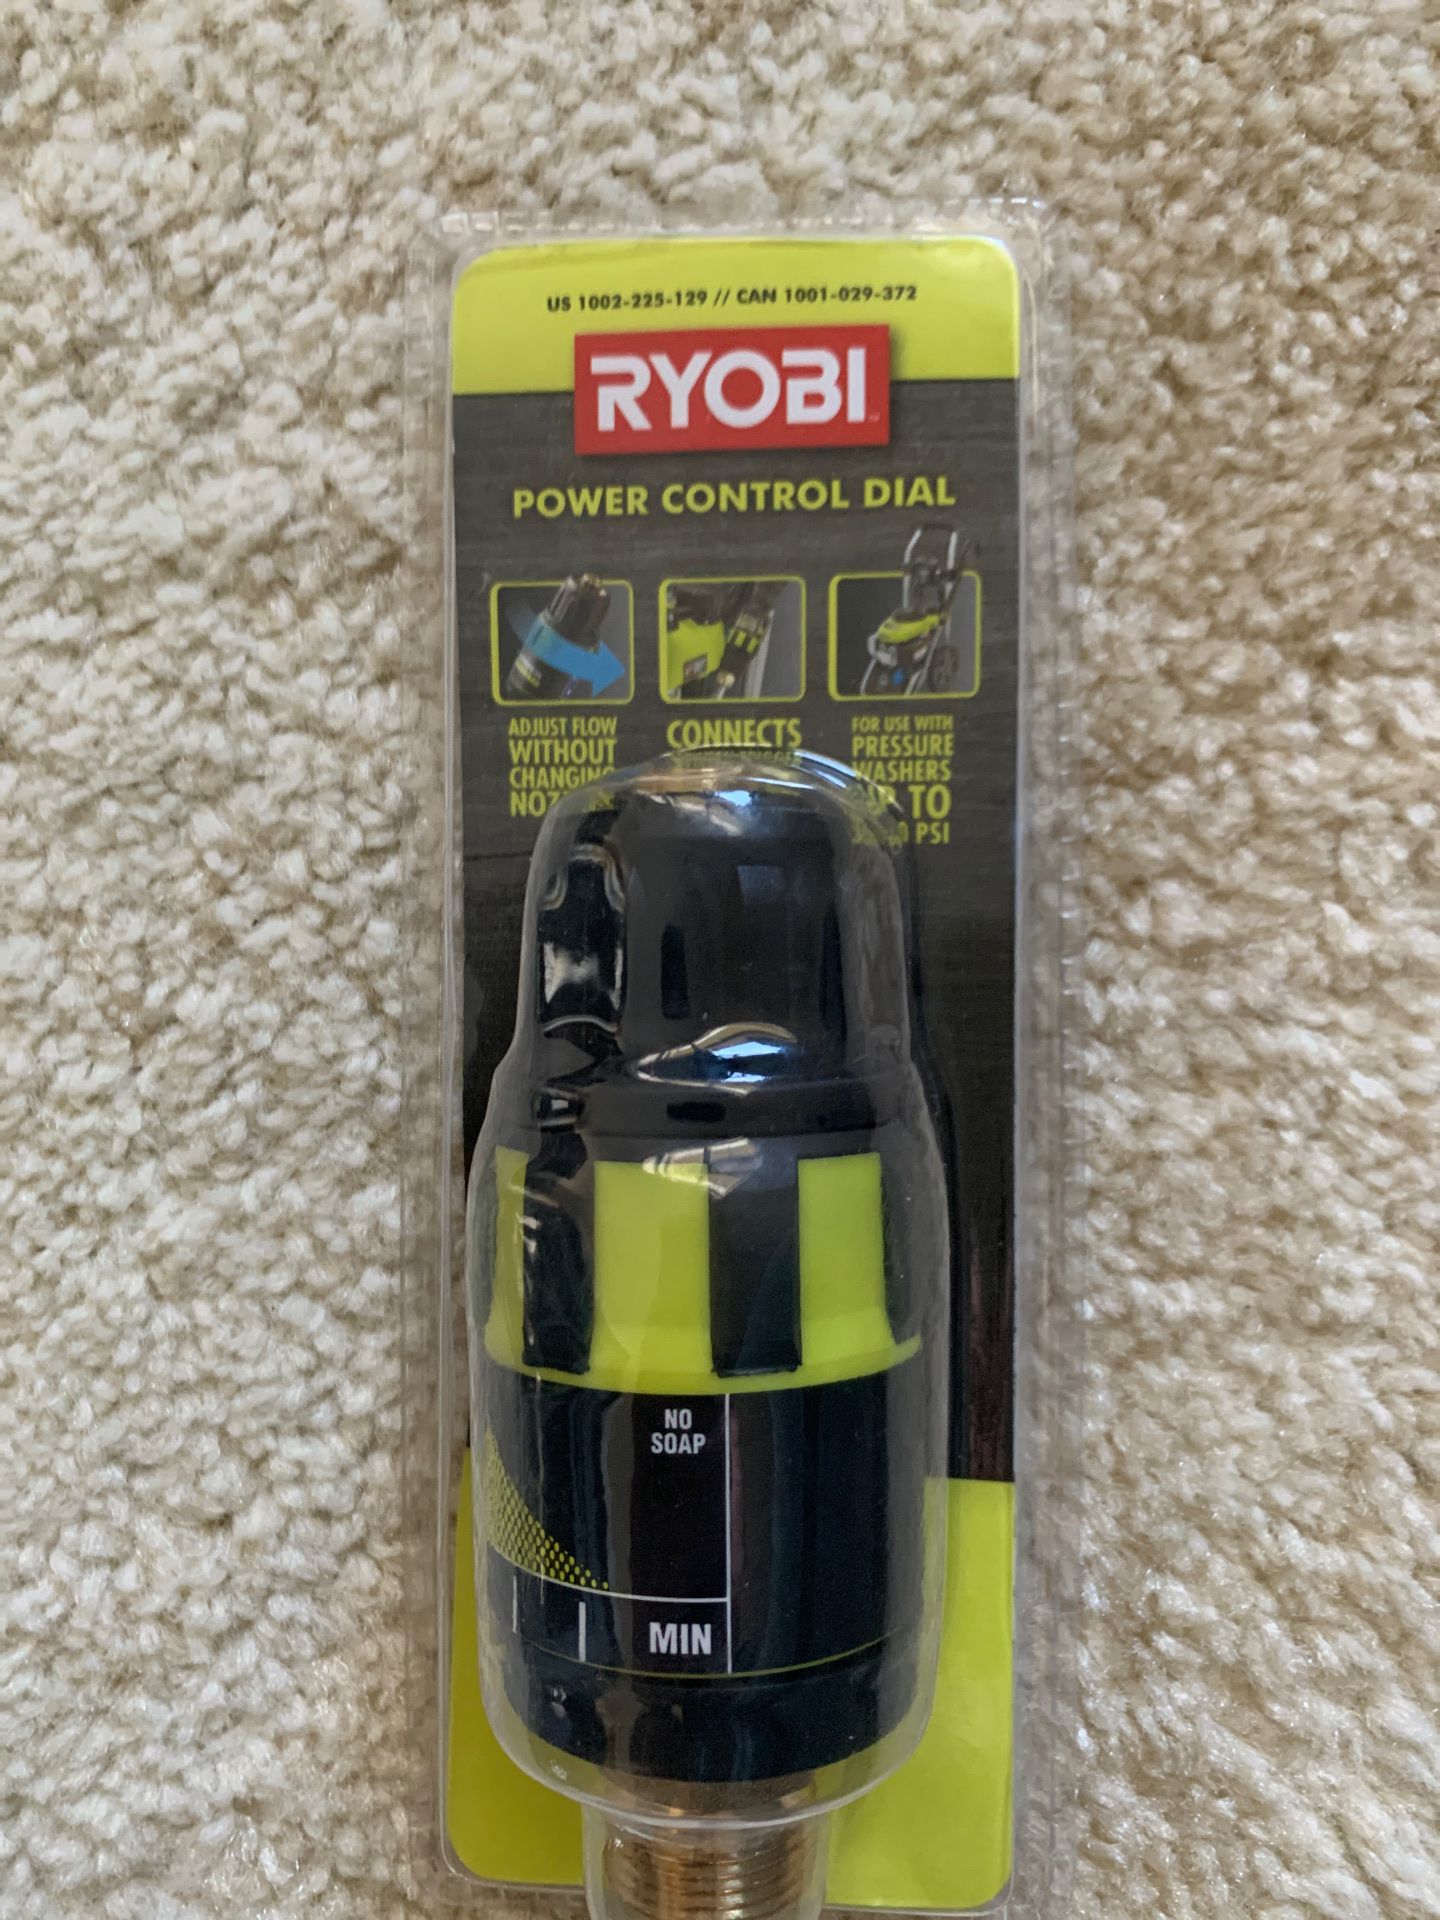 Ryobi pressure washer power control dial